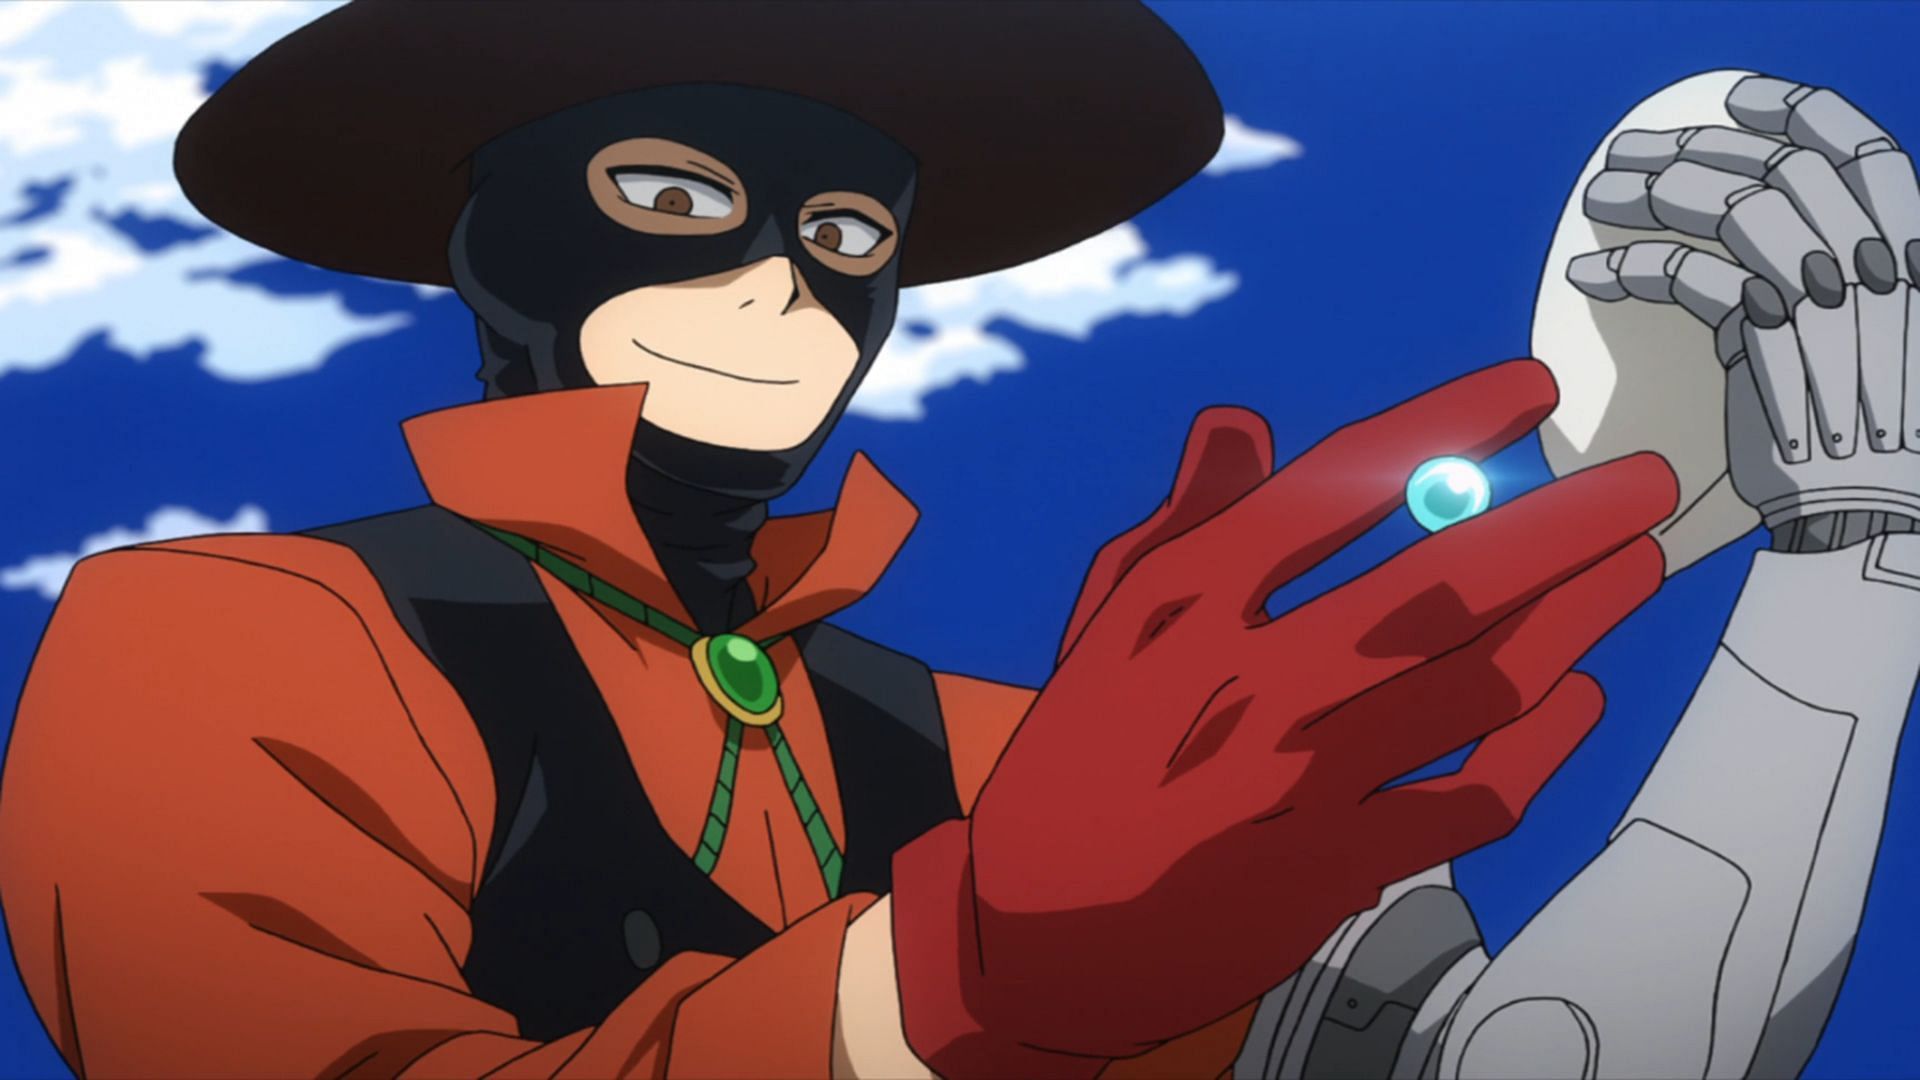 Mr. Compress as seen in the series' anime (Image via Studio Bones)